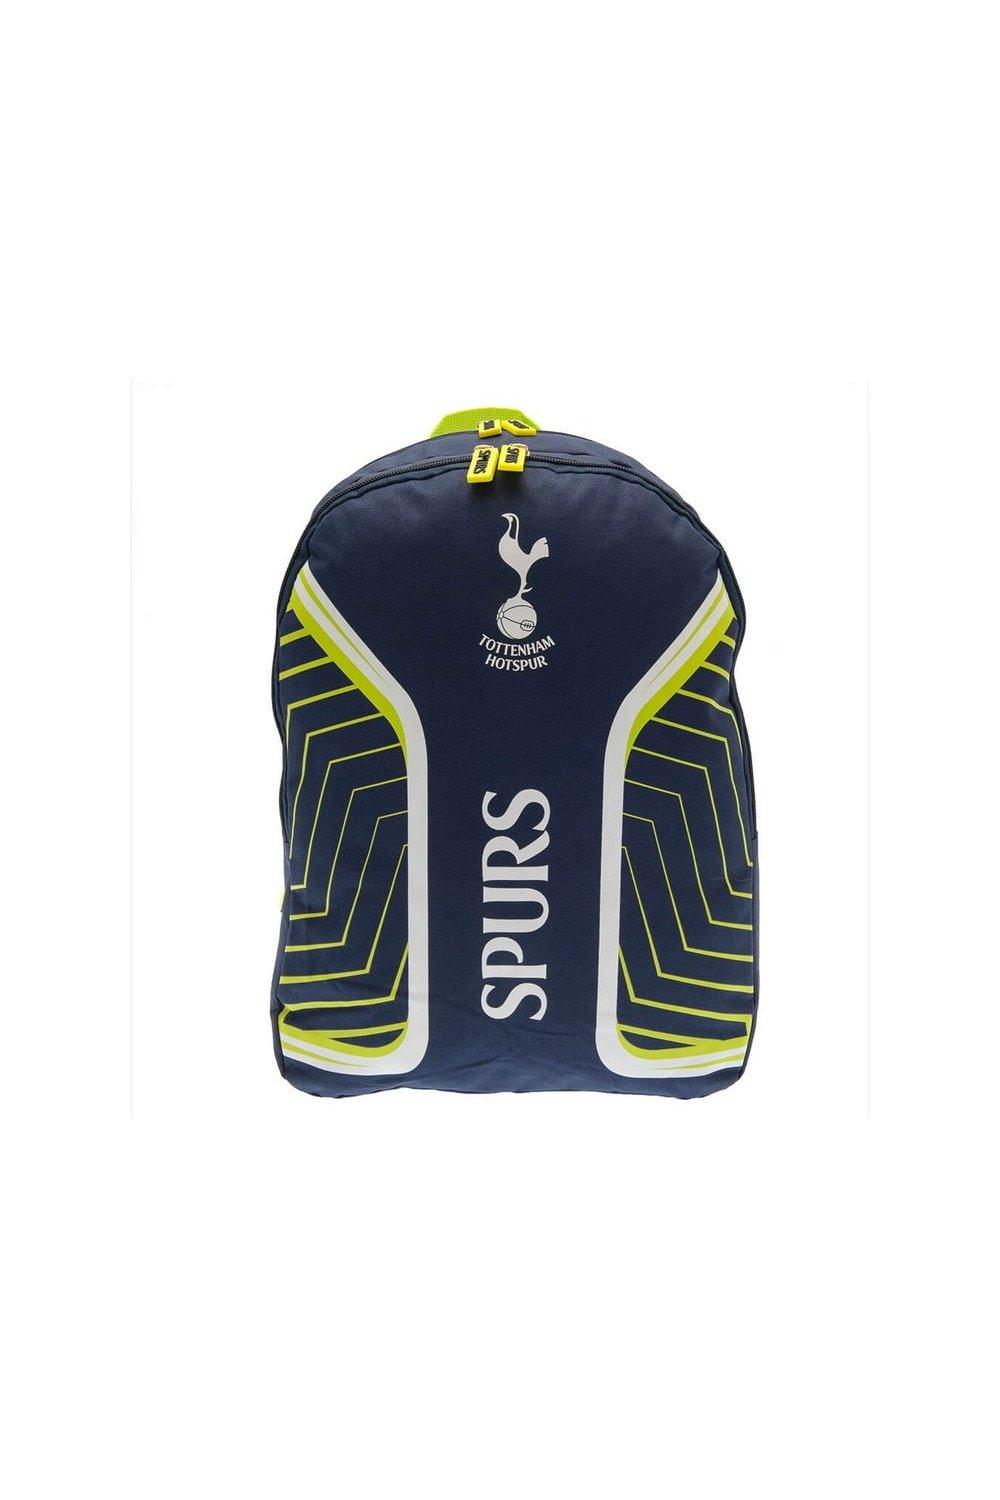 Флэш-рюкзак Tottenham Hotspur FC, темно-синий флэш рюкзак tottenham hotspur fc темно синий